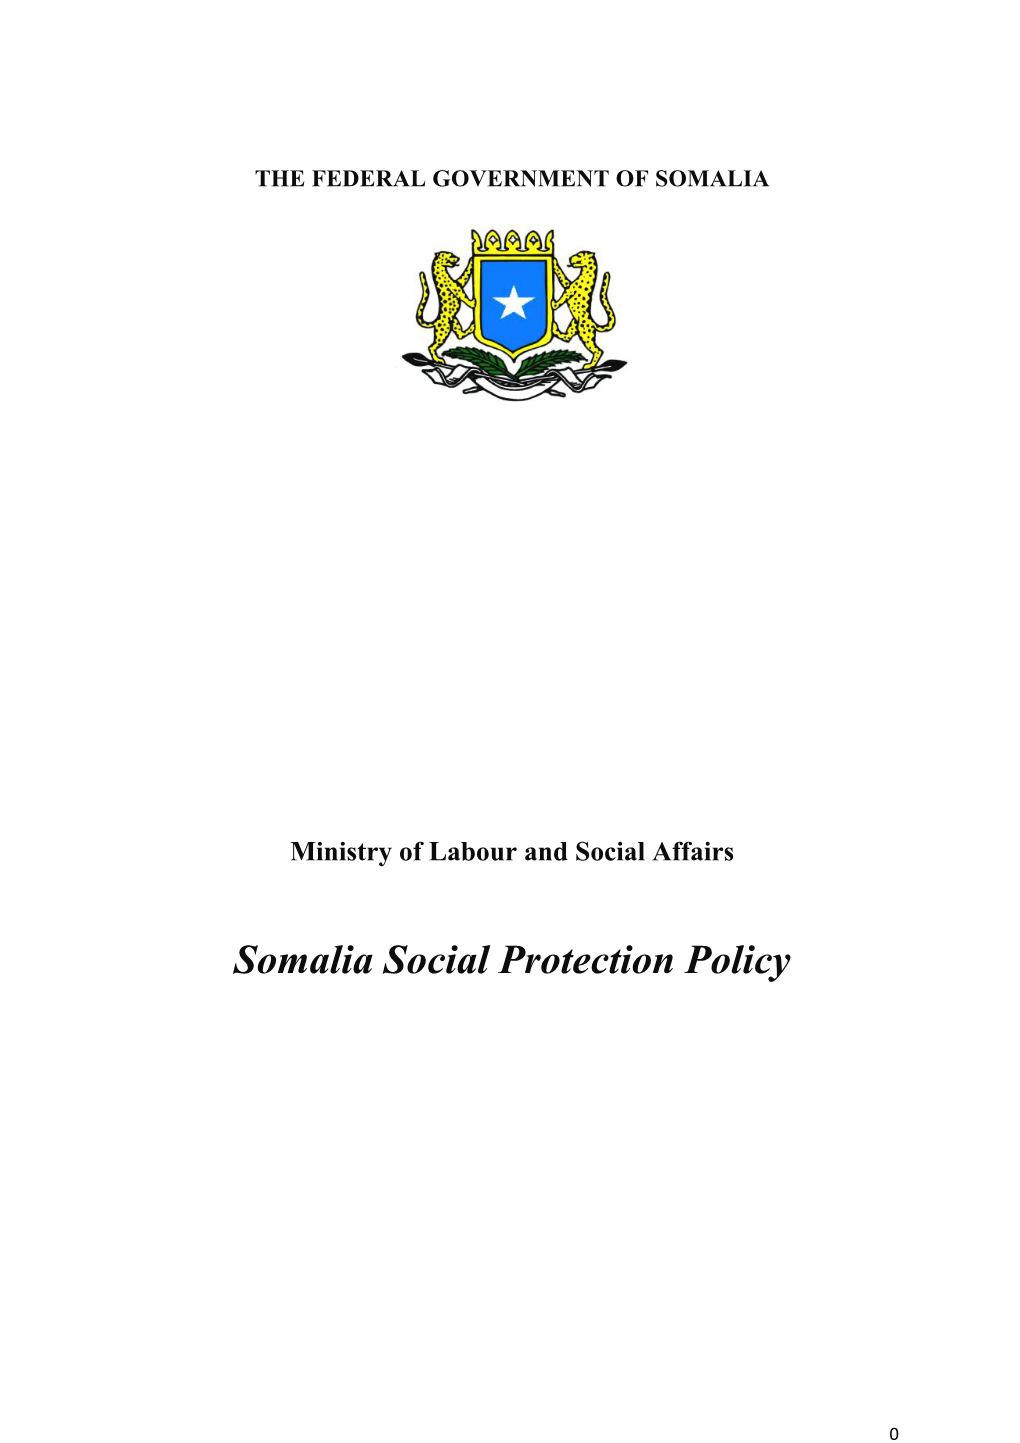 Somalia Social Protection Policy